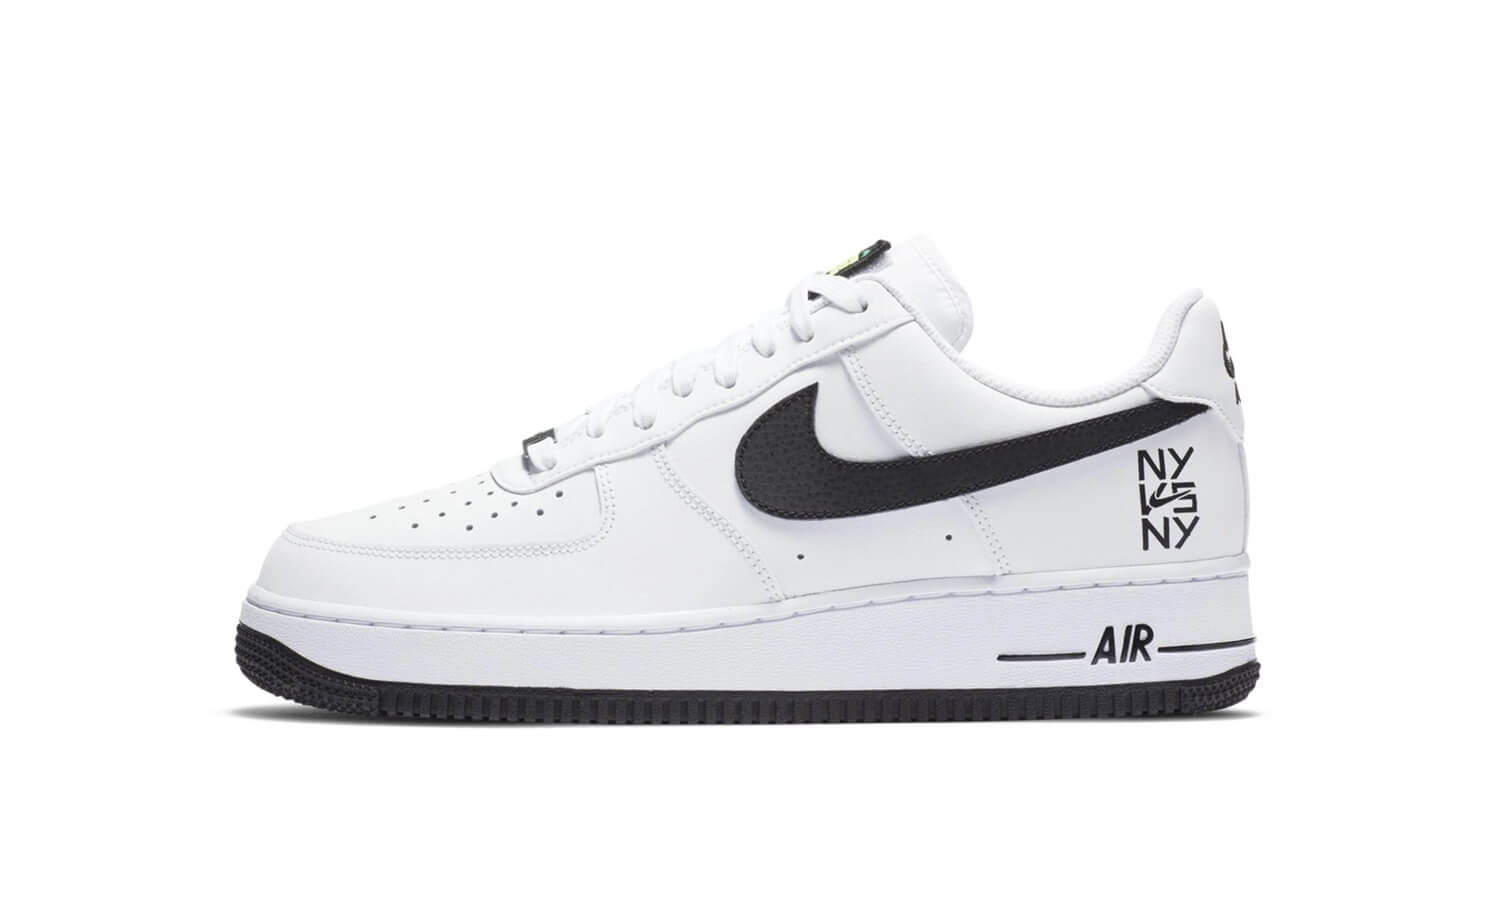 Der Nike Air Force 1 NY vs NY kommt mit 